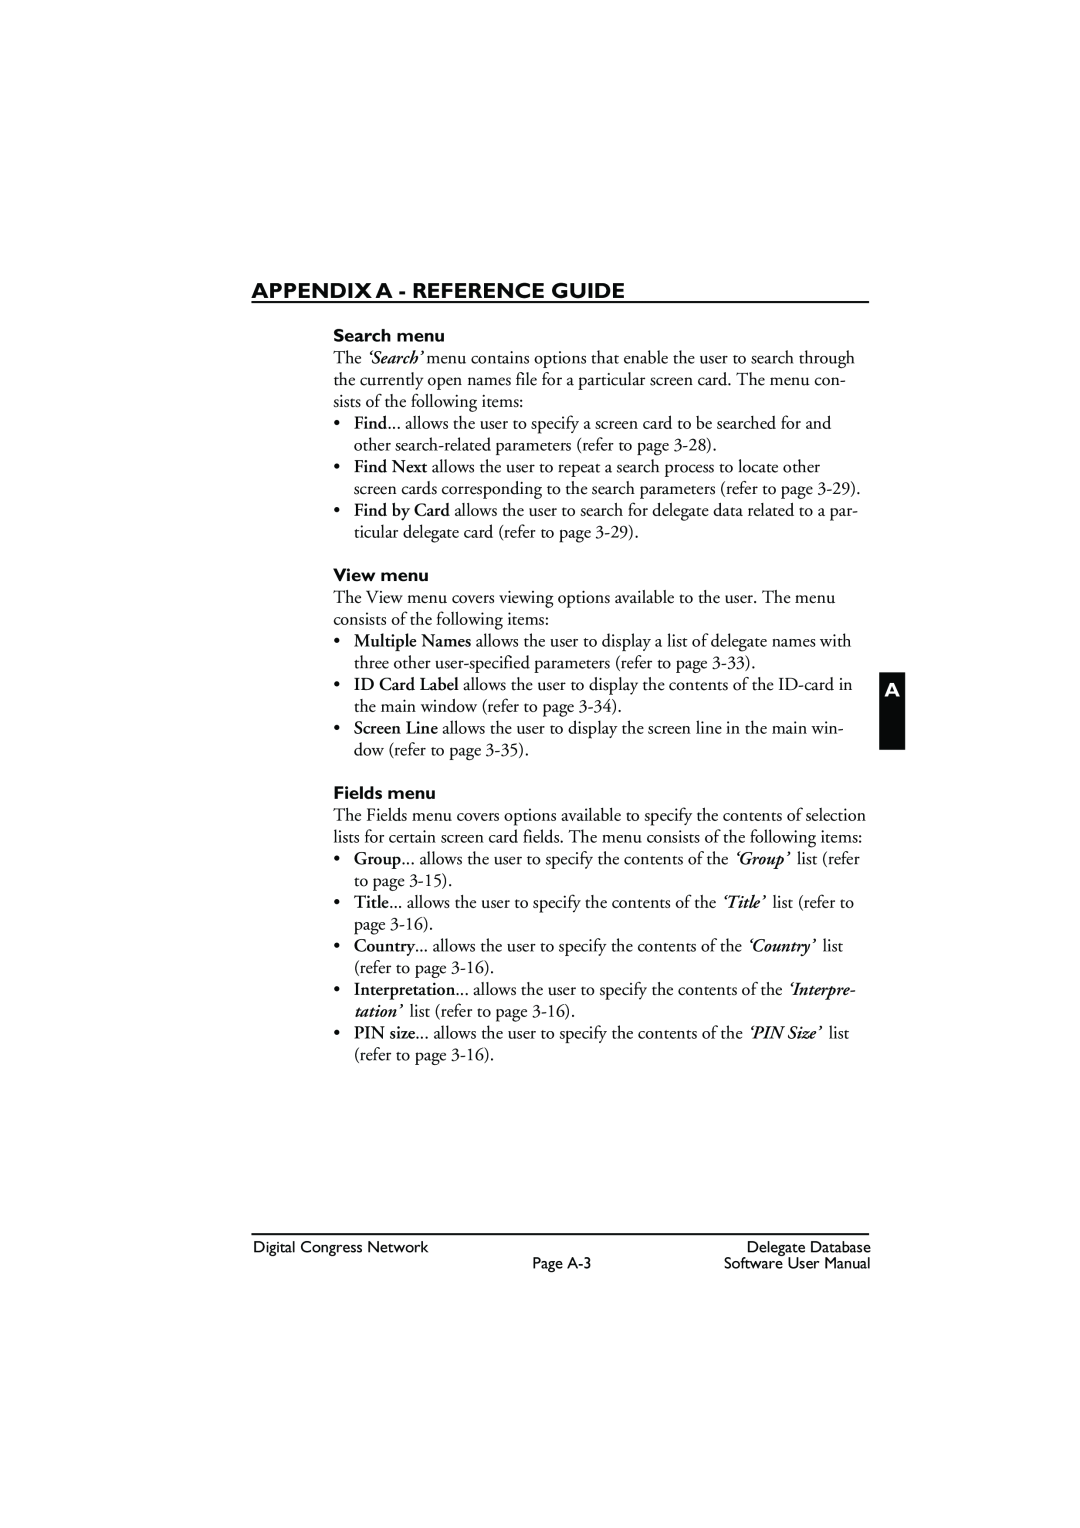 Bosch Appliances LBB3580 user manual Appendix A - Reference Guide, Search menu, View menu, Fields menu 